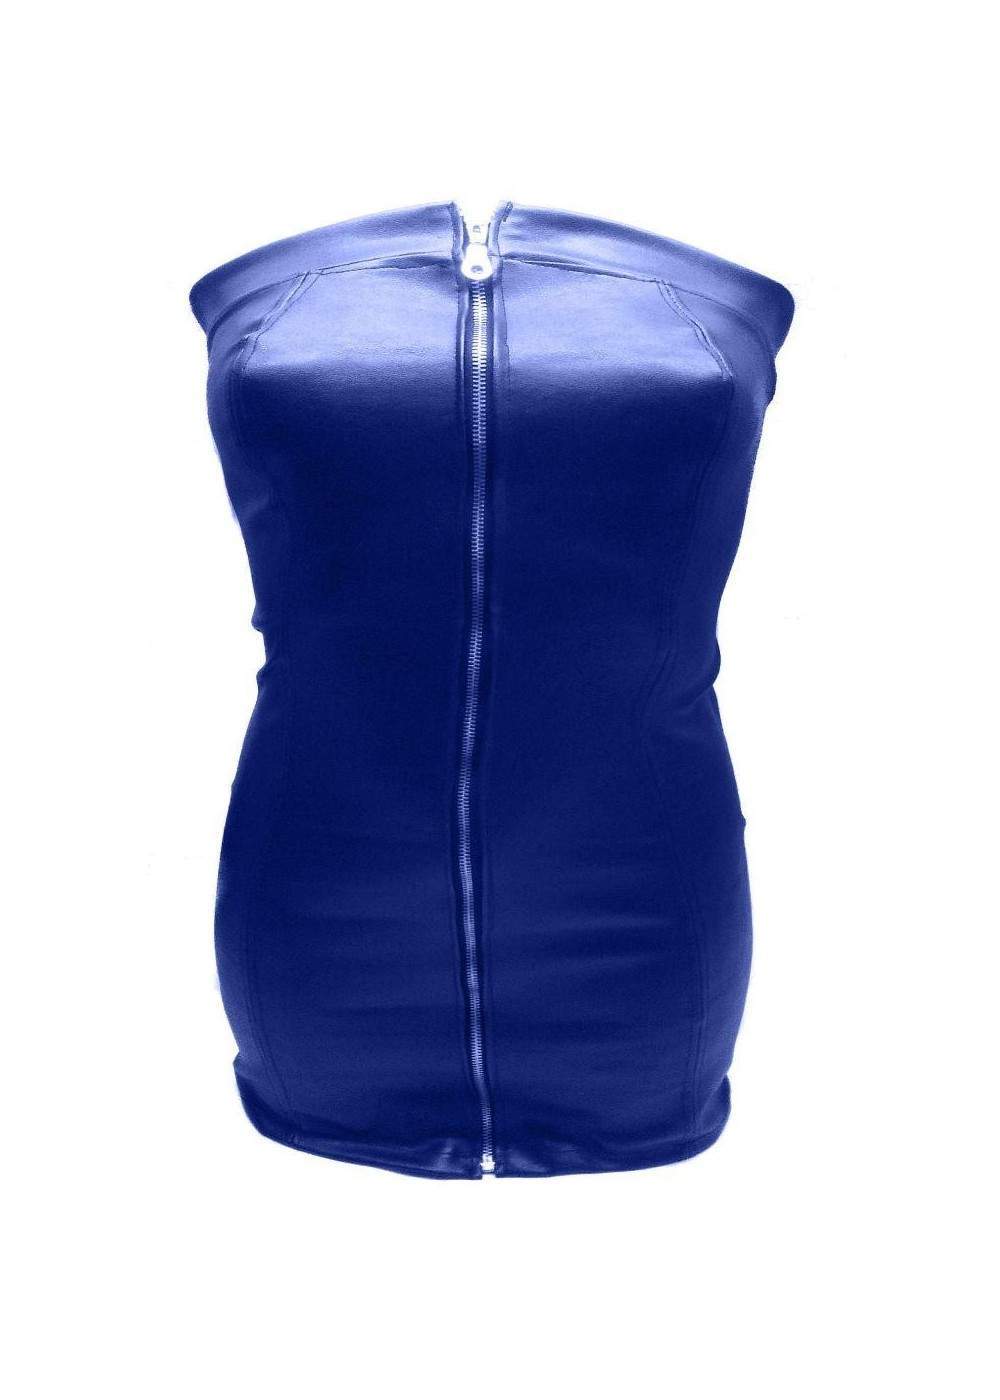 Vestido de cuero muy suave azul talla L - XXL (44 - 52) - Deutsche Produktion